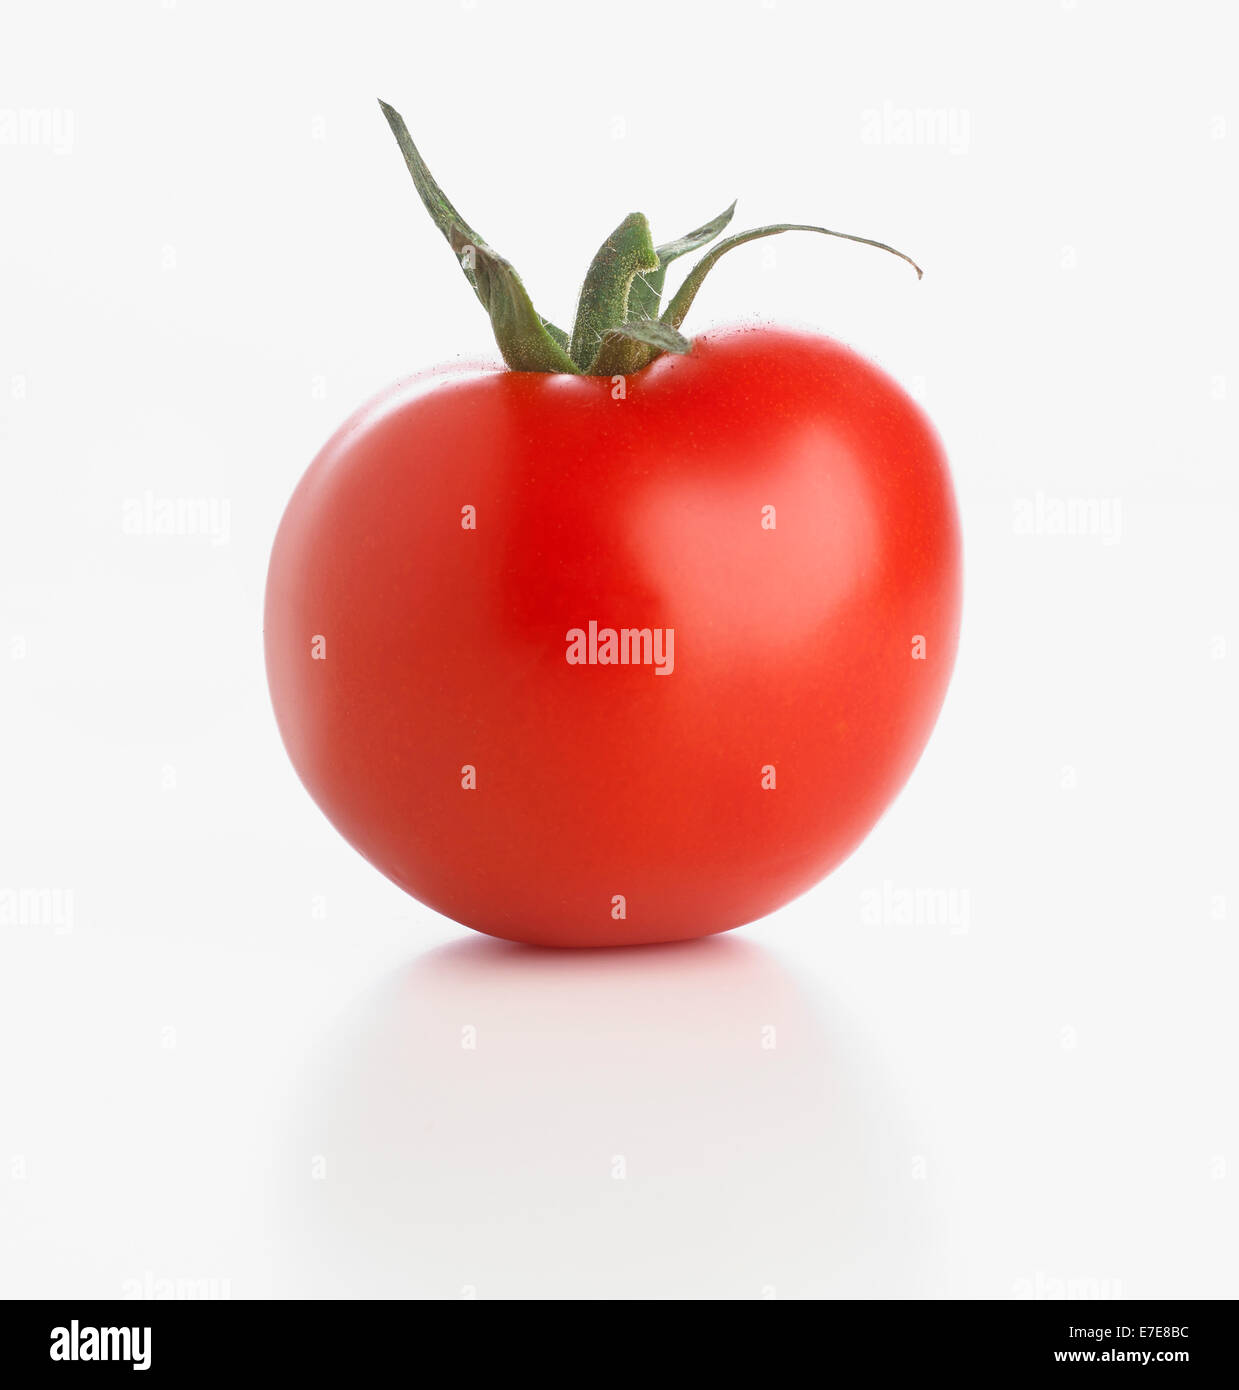 Red tomato Stock Photo